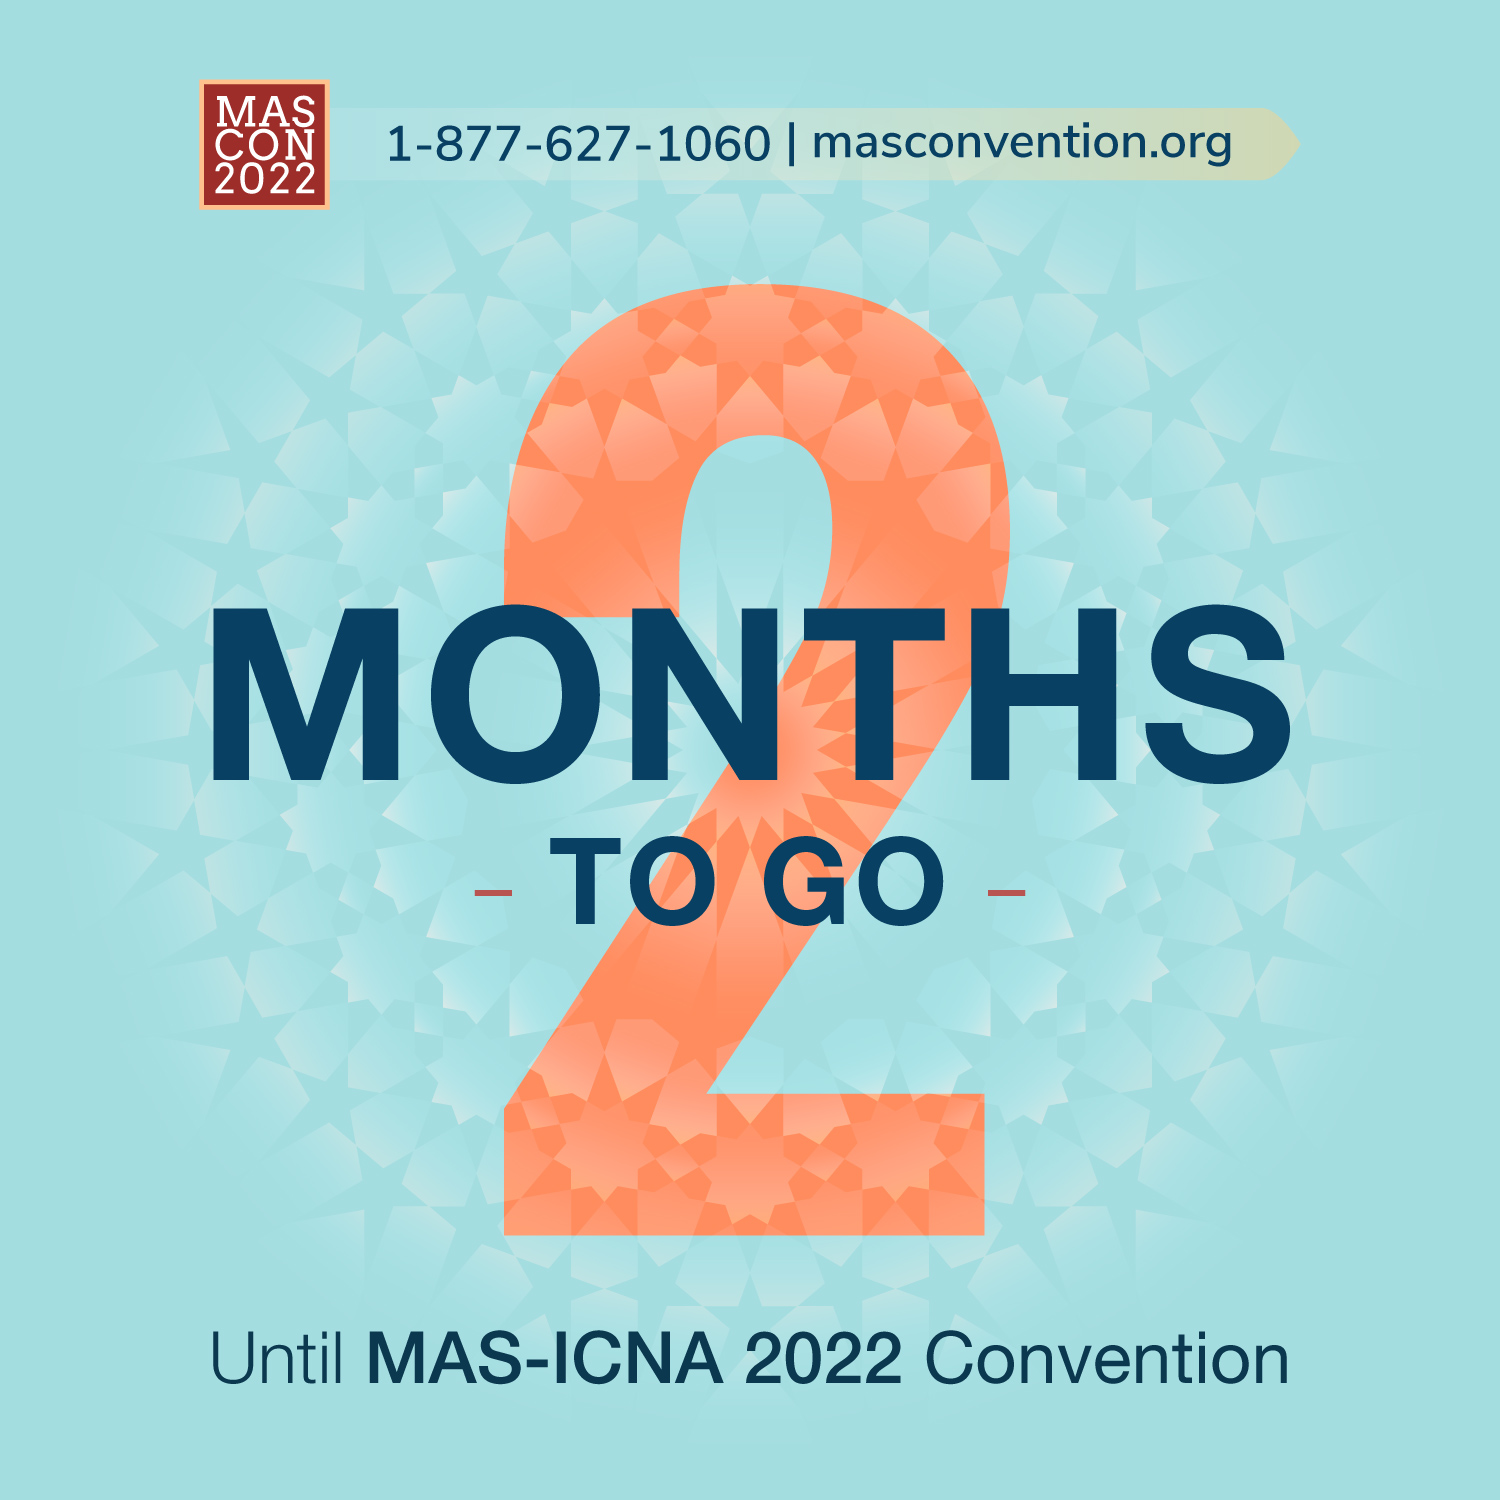 Programs - MAS-ICNA ANNUAL CONVENTION - CHICAGO, IL